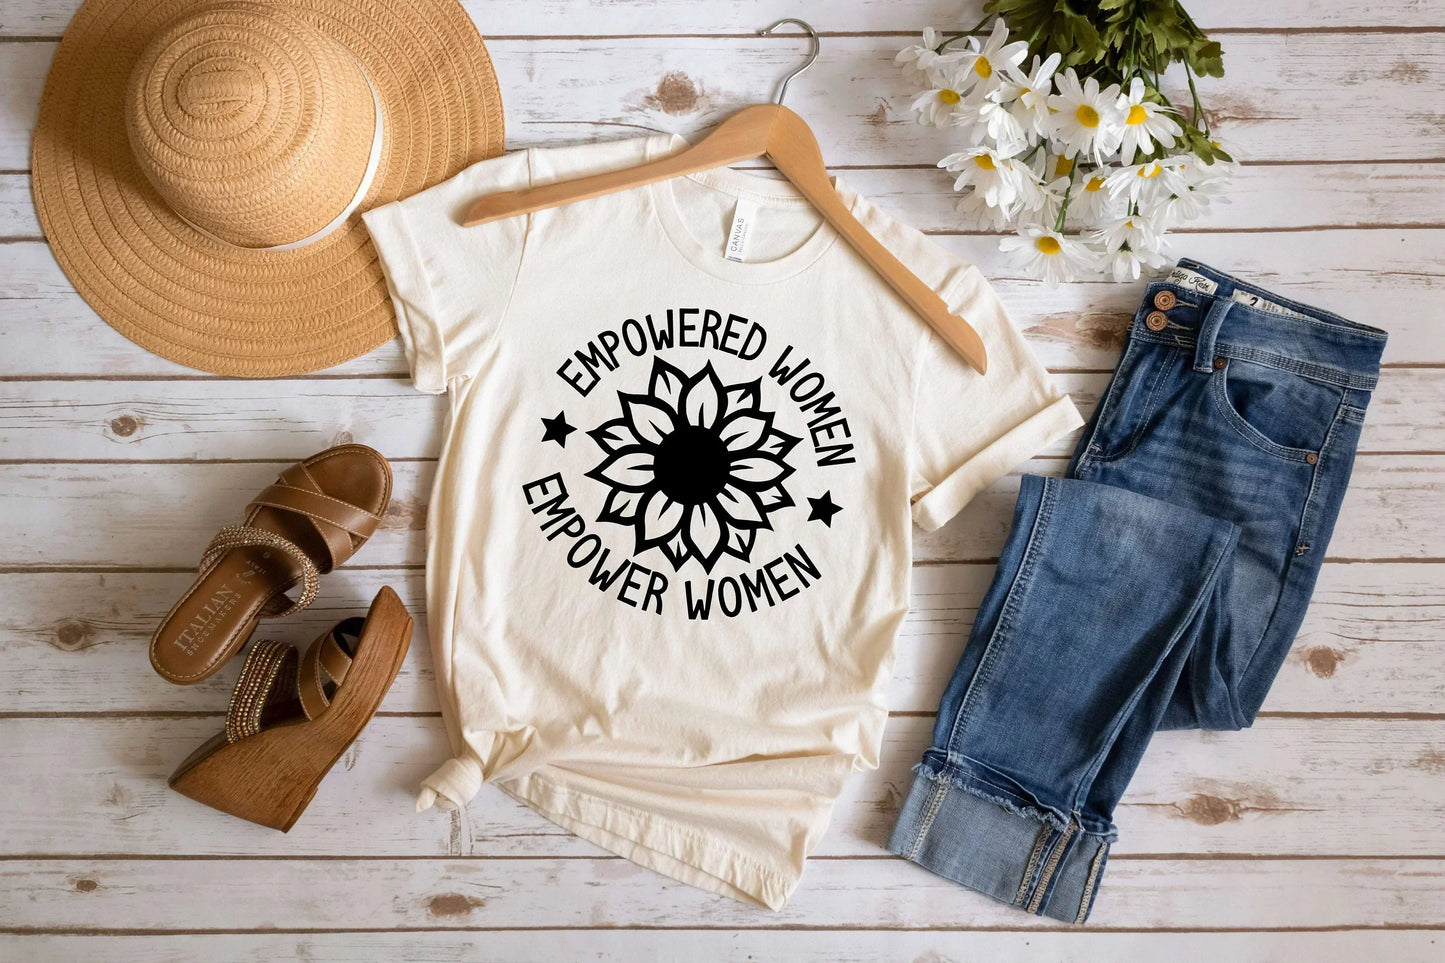 Empowered Women Empower Women T-Shirt | Prochoice Sweatshirt | Feminism | Equal Rights Hoodie | Women's Month Tshirt | Feminist Tops & Tees